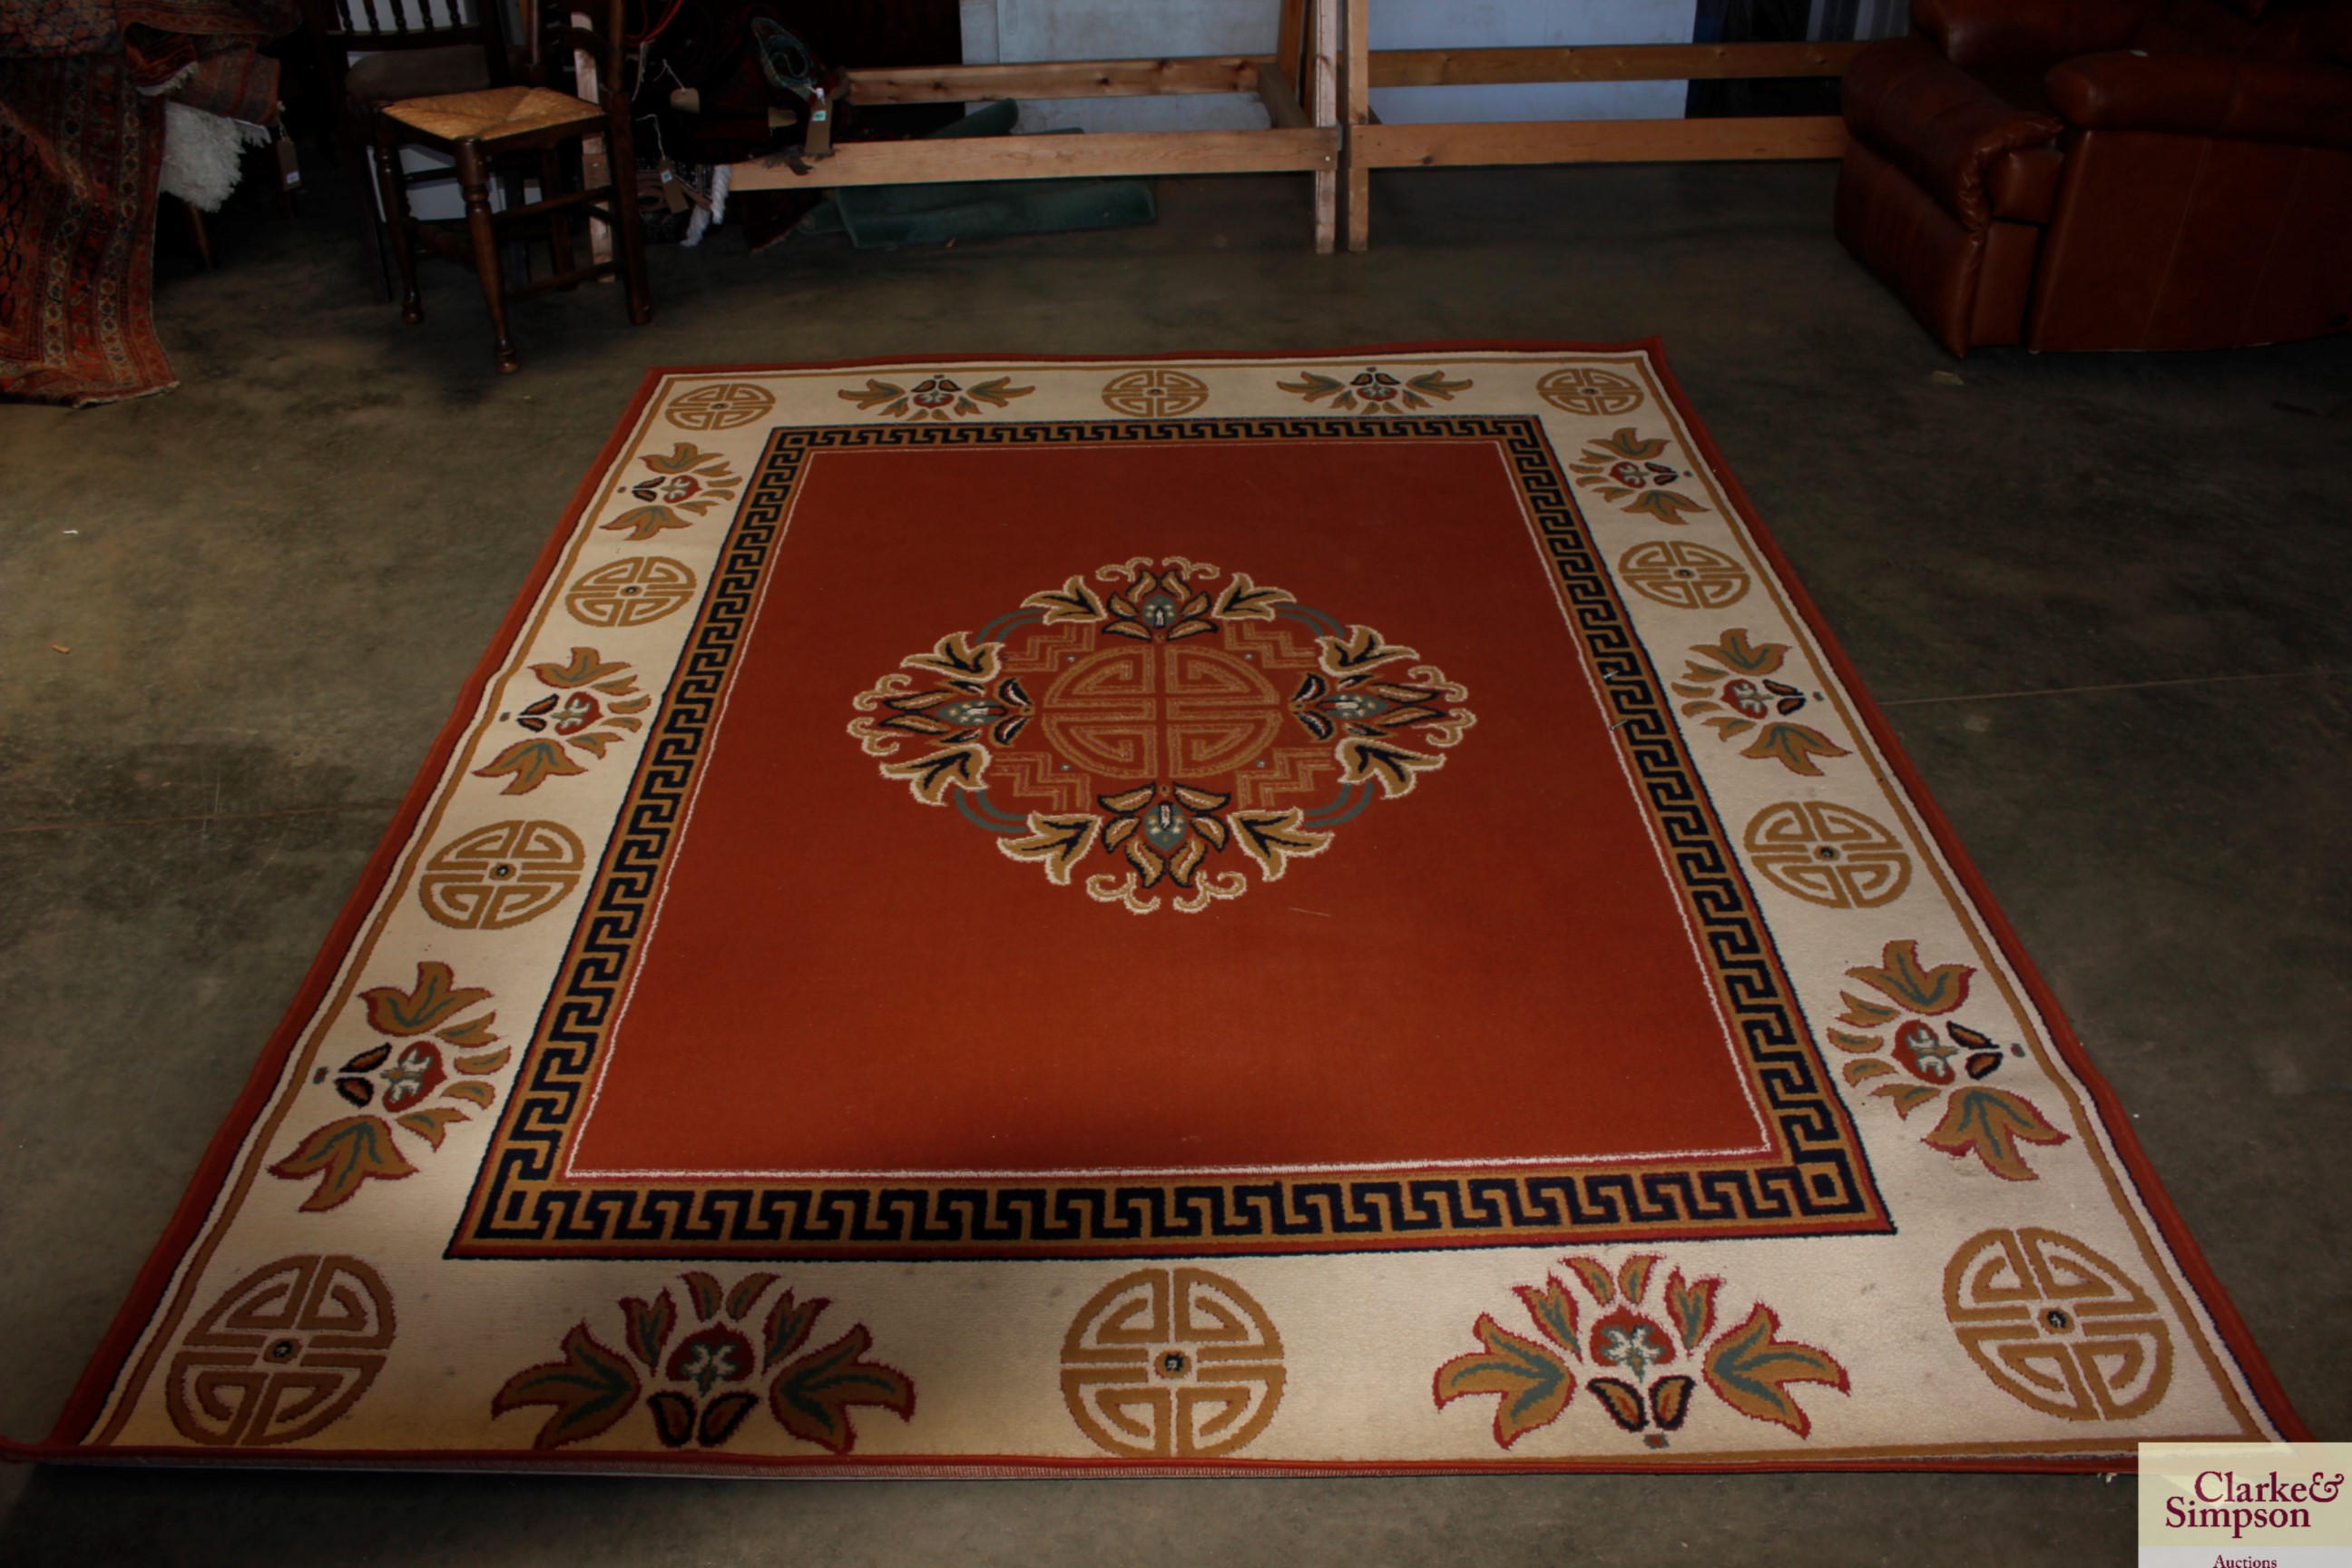 An approx. 8'10" x 6'7" Greek key patterned rug